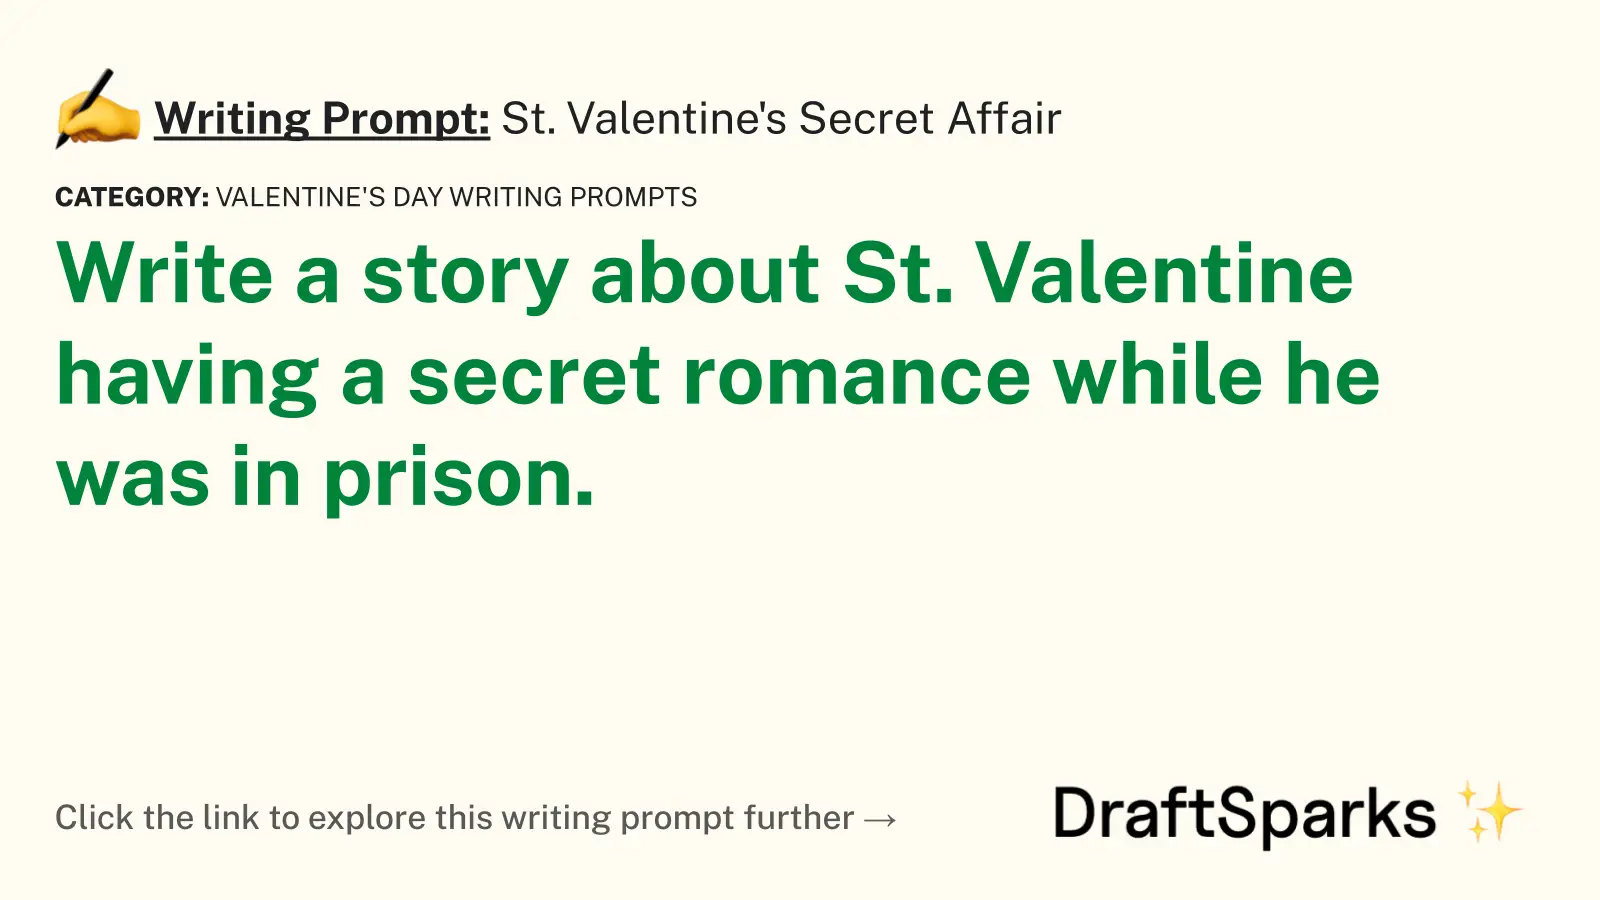 St. Valentine’s Secret Affair